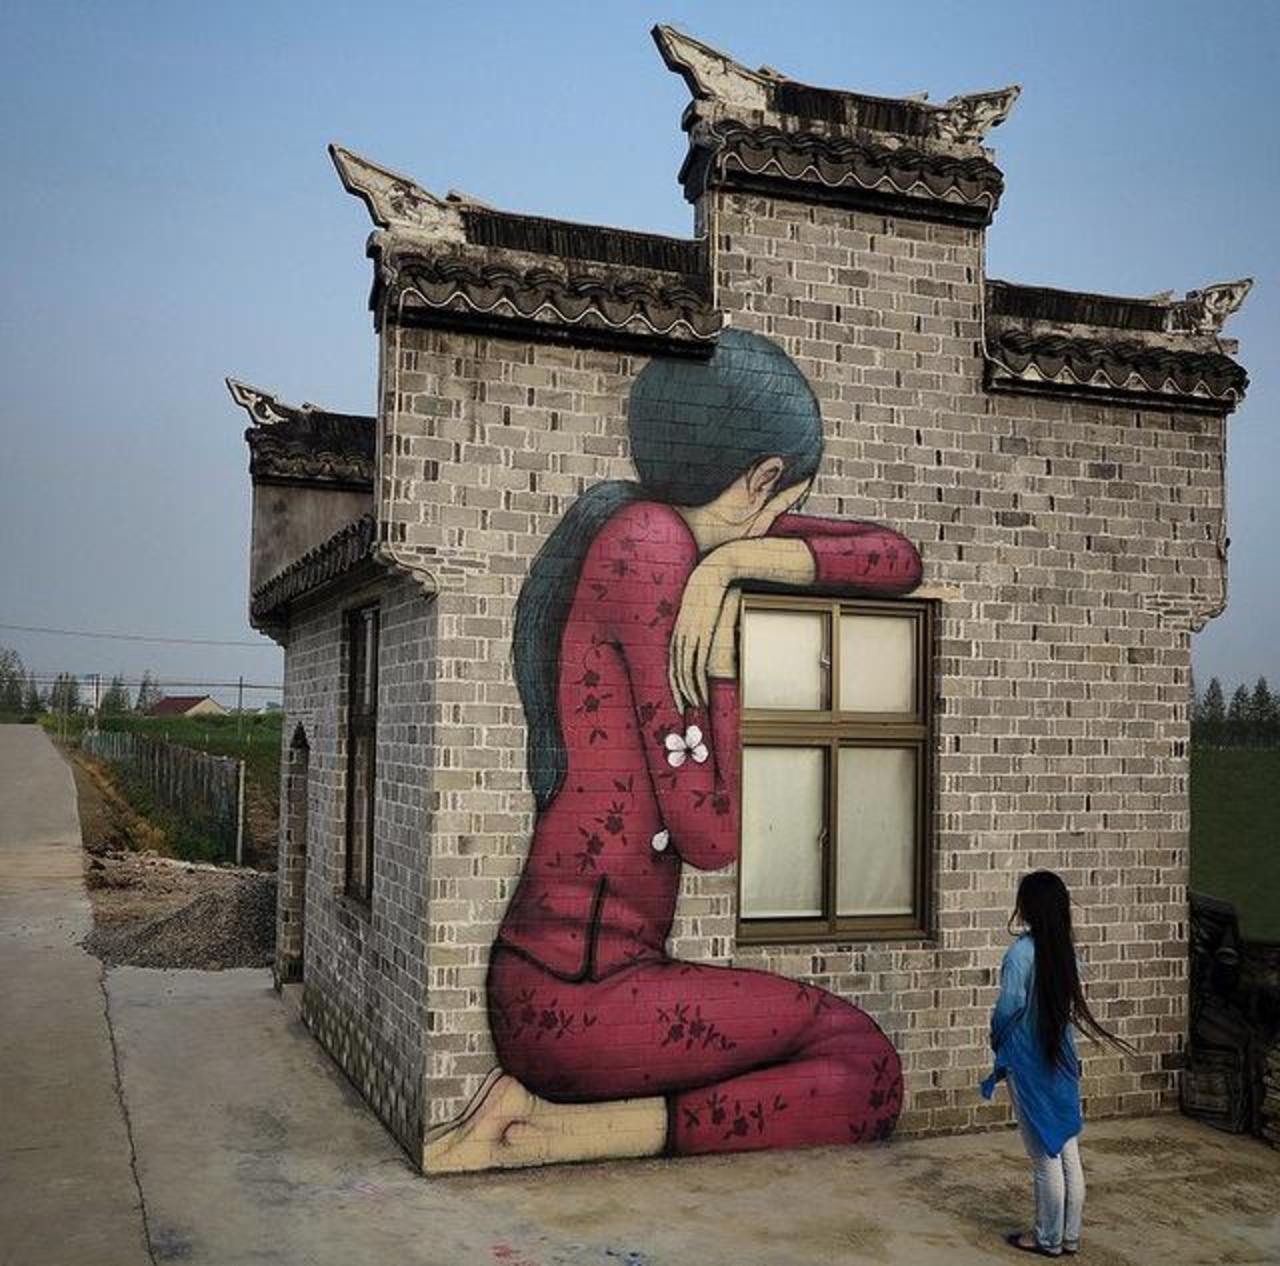 New Street Art by Seth Globepainter in Fengzing, China 

#art #arte #graffiti #streetart http://t.co/IJ7gh8BEpq